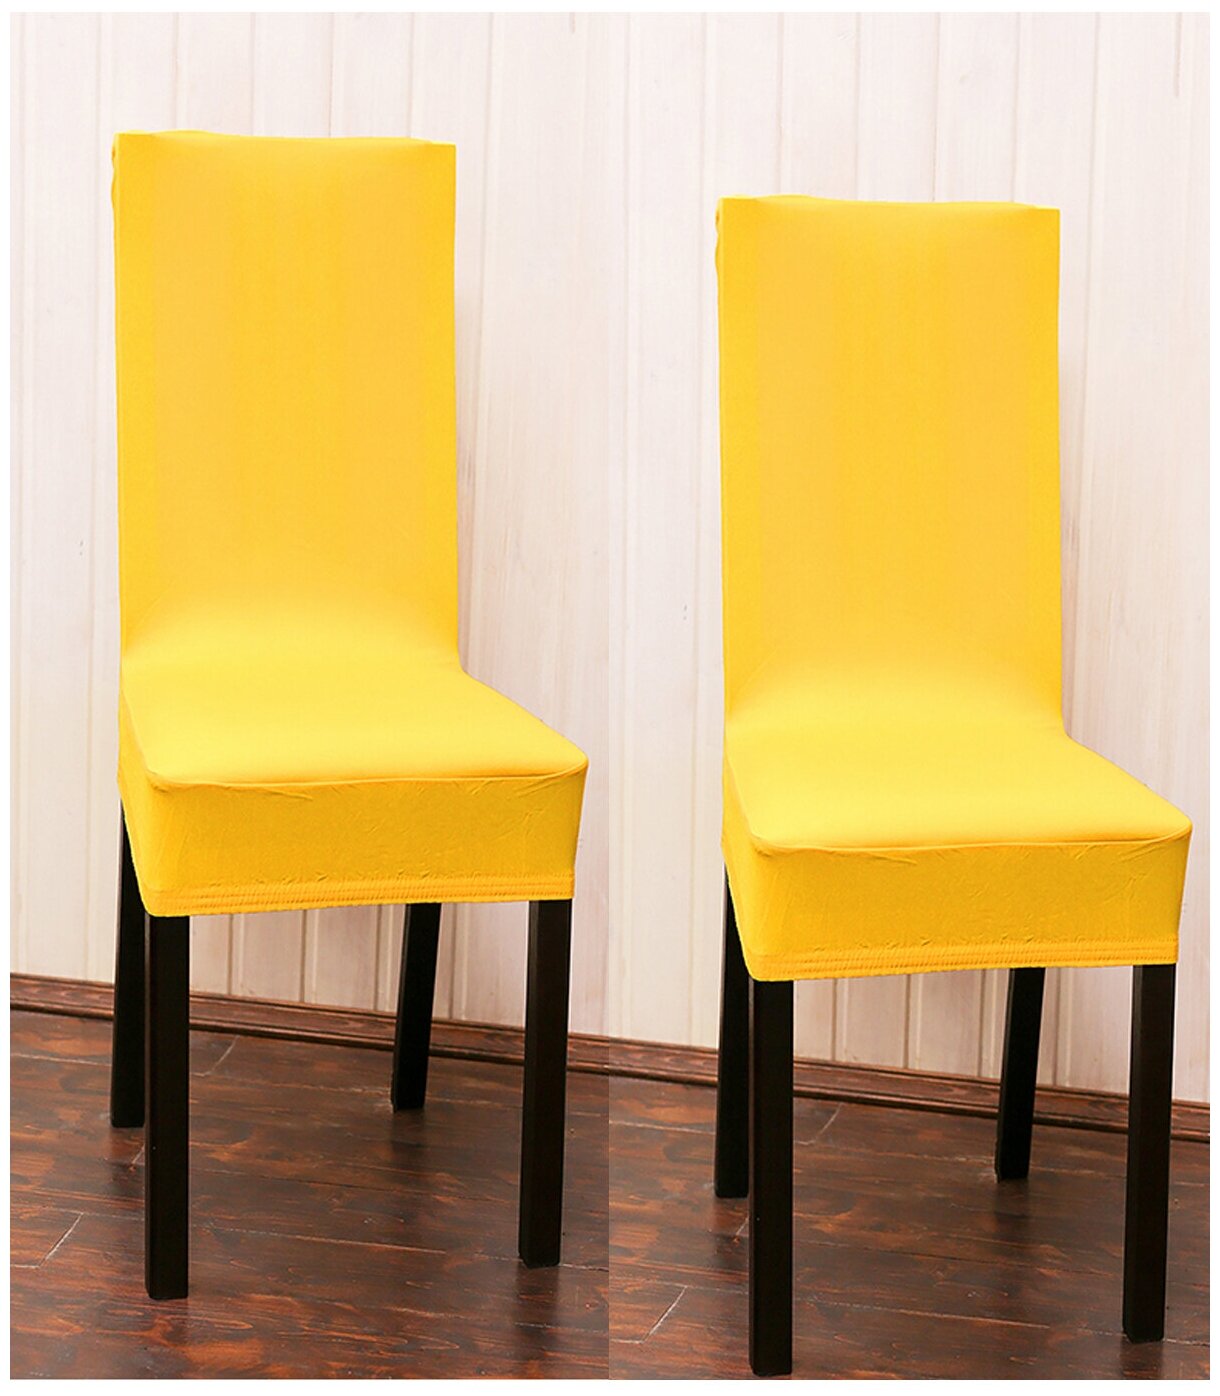 Чехол на стул / чехол для стула со спинкой / Комплект 2 шт / чехлы для мебели / Коллекция "Jersey" Желтый